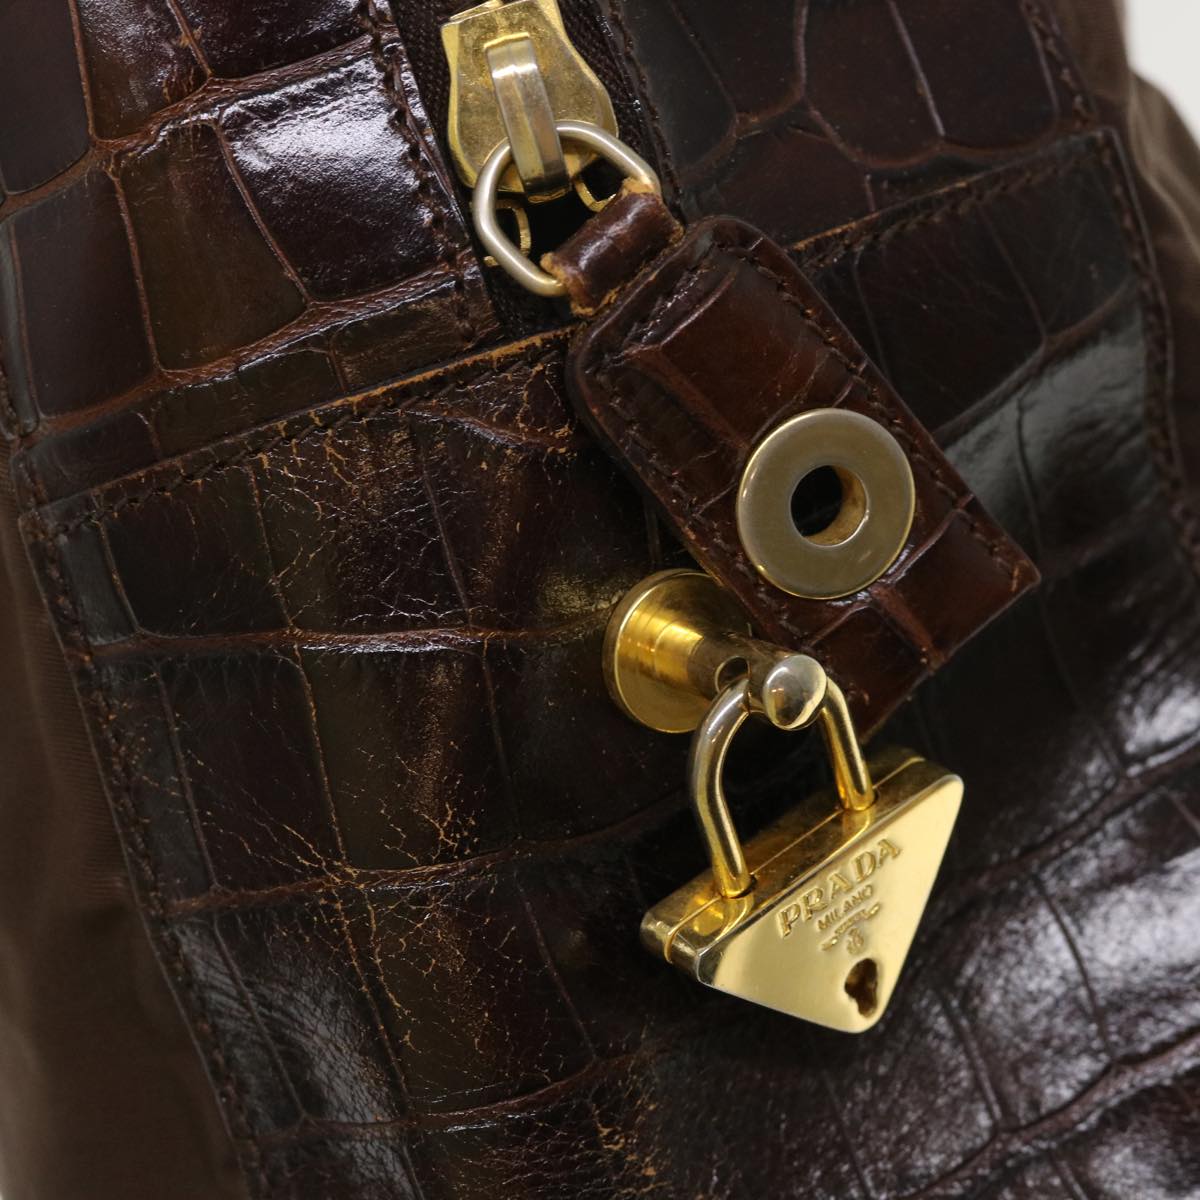 PRADA Hand Bag Leather Nylon Brown Auth bs6628